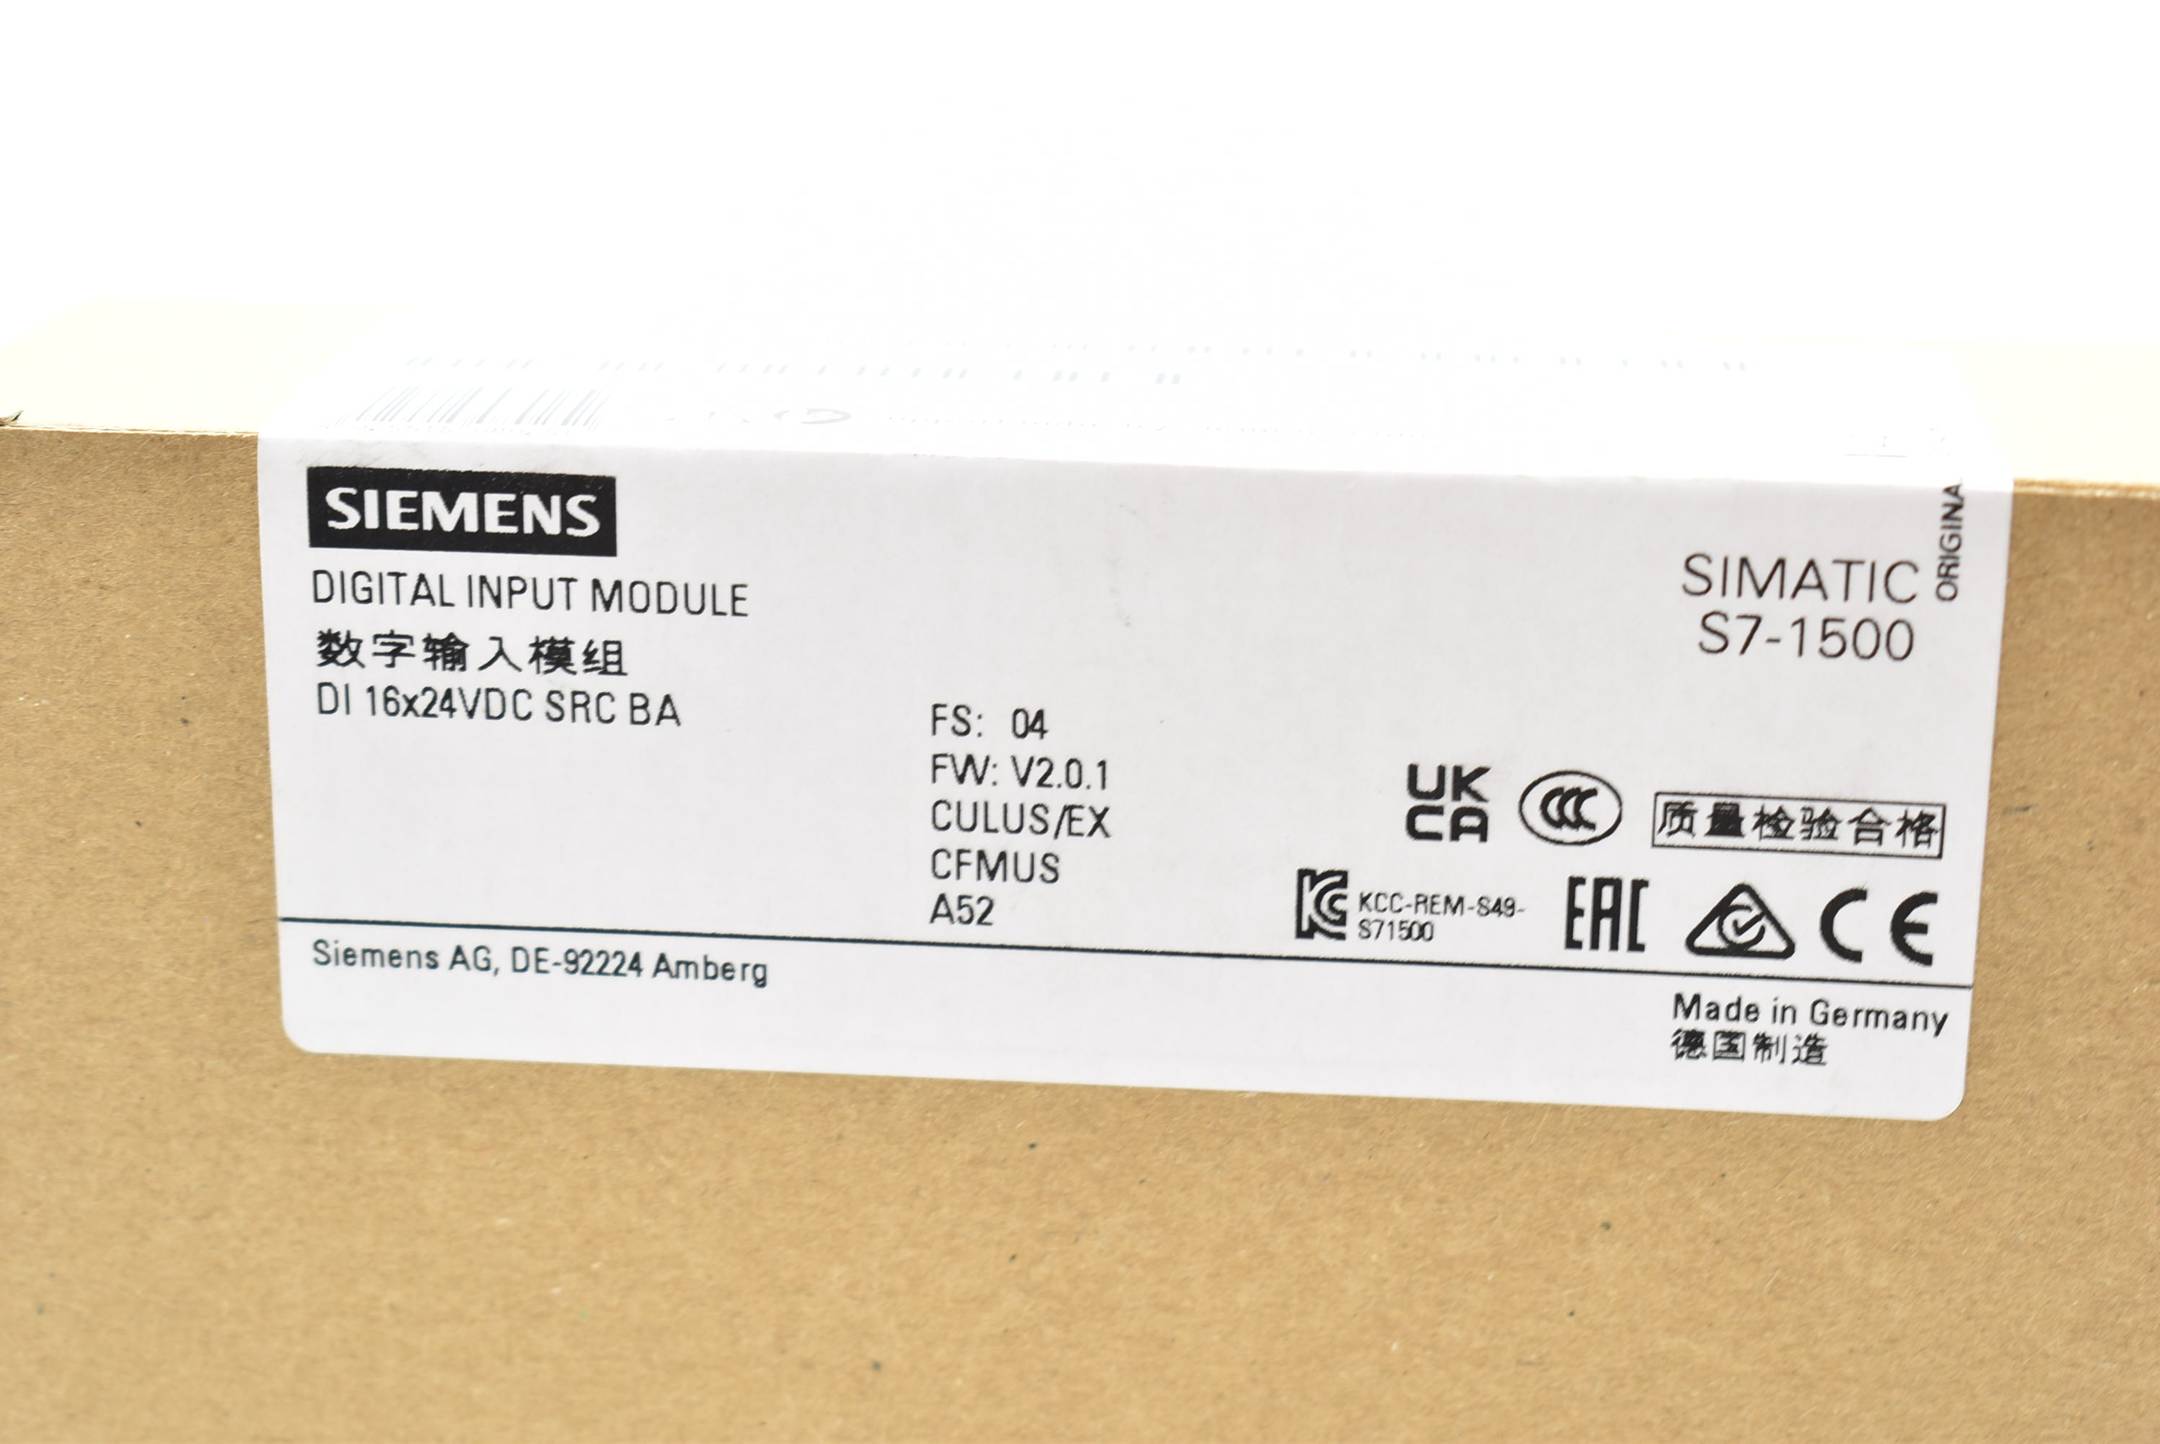 Siemens simatic S7-1500 6ES7 521-1BH50-0AA0 ( 6ES7521-1BH50-0AA0 ) FS.4